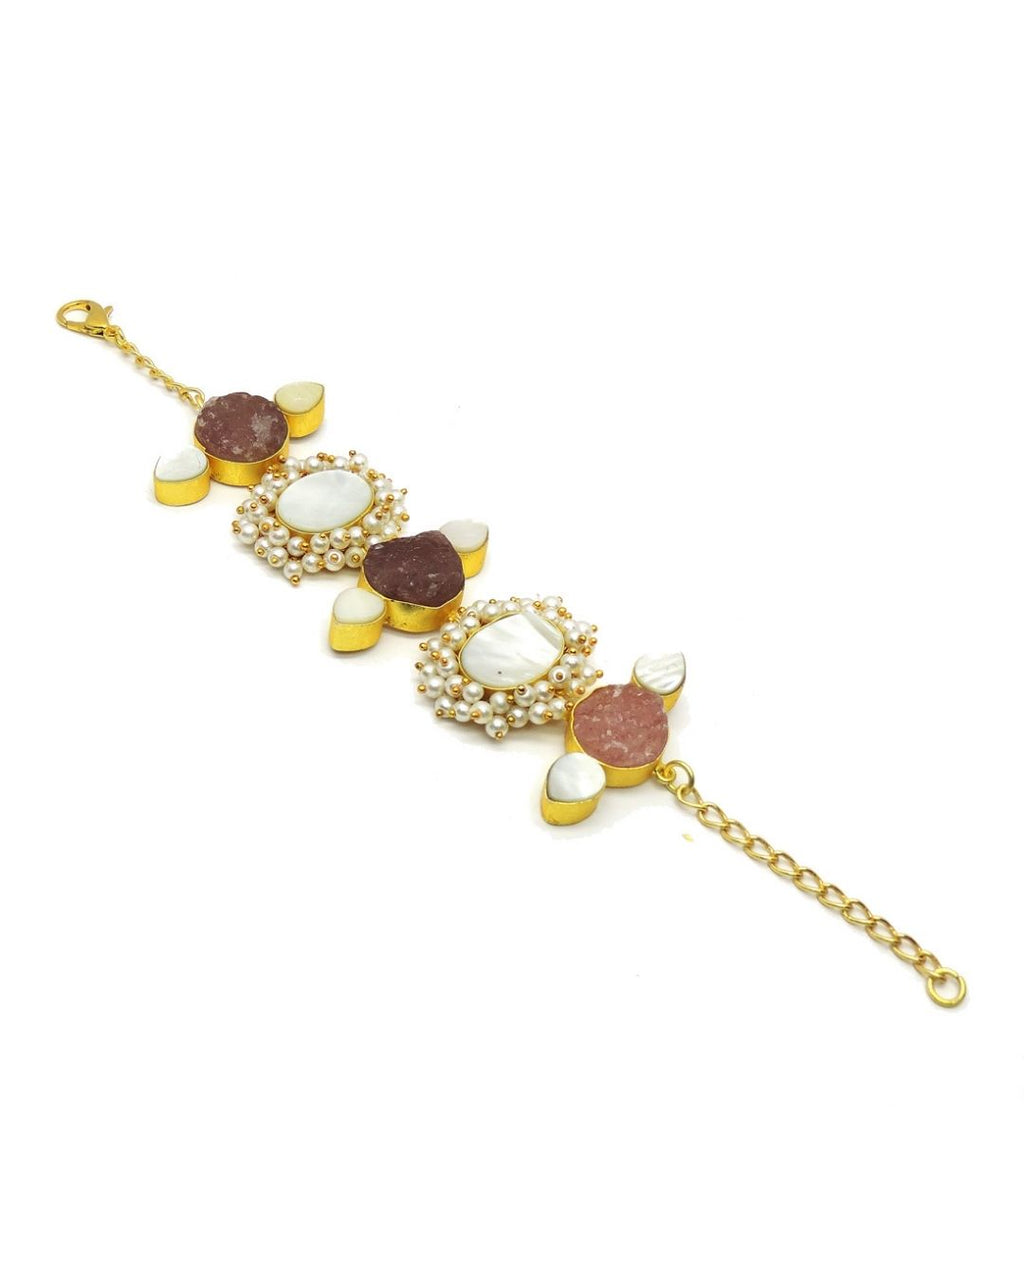 Fleur Bracelet - Bracelets & Cuffs - Handcrafted Jewellery - Made in India - Dubai Jewellery, Fashion & Lifestyle - Dori